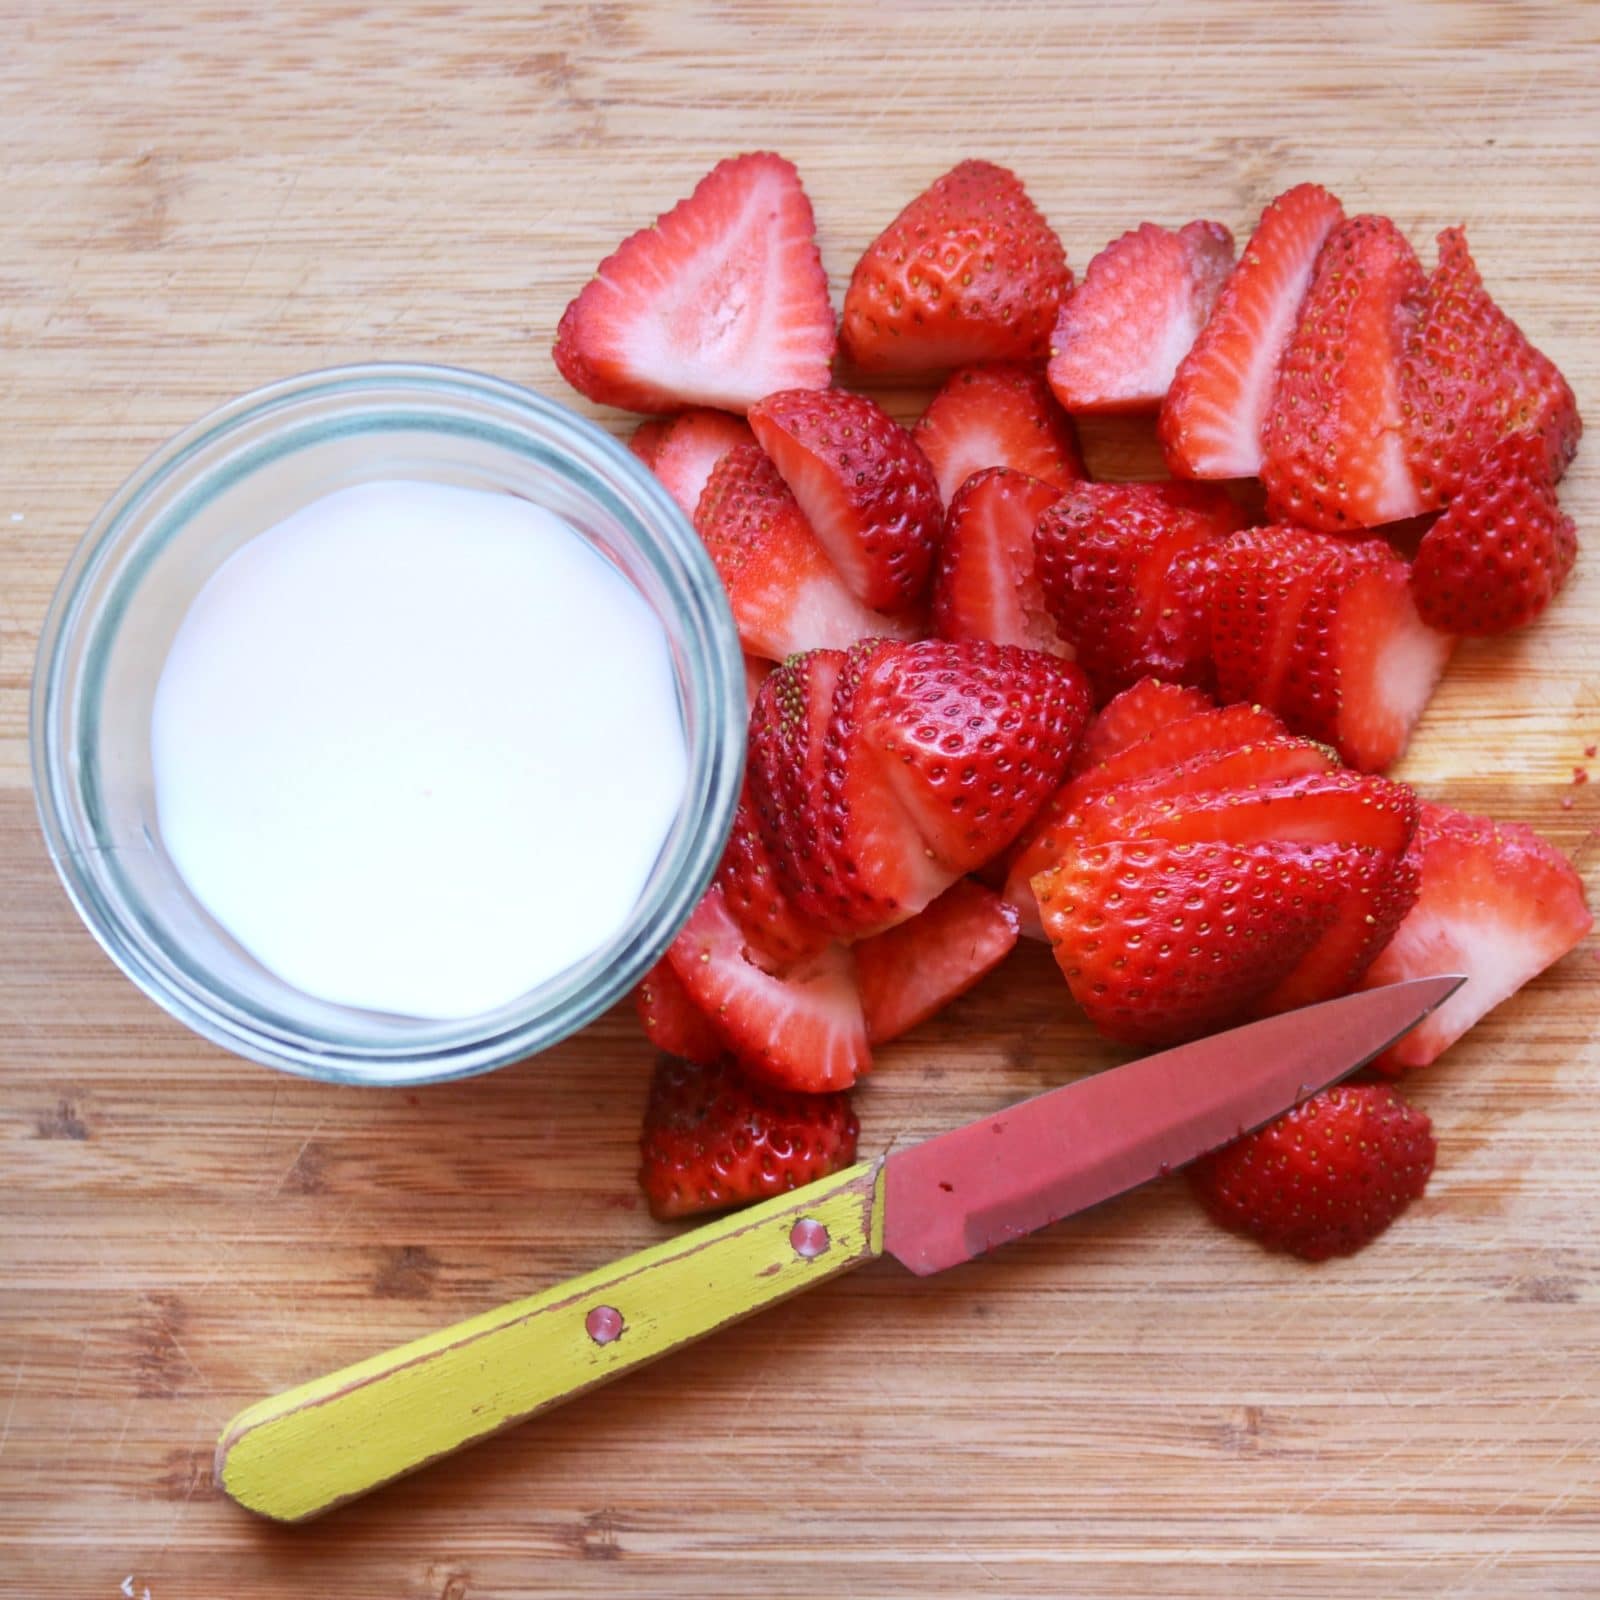 Strawberry Milk recipe by Crafty Chica.